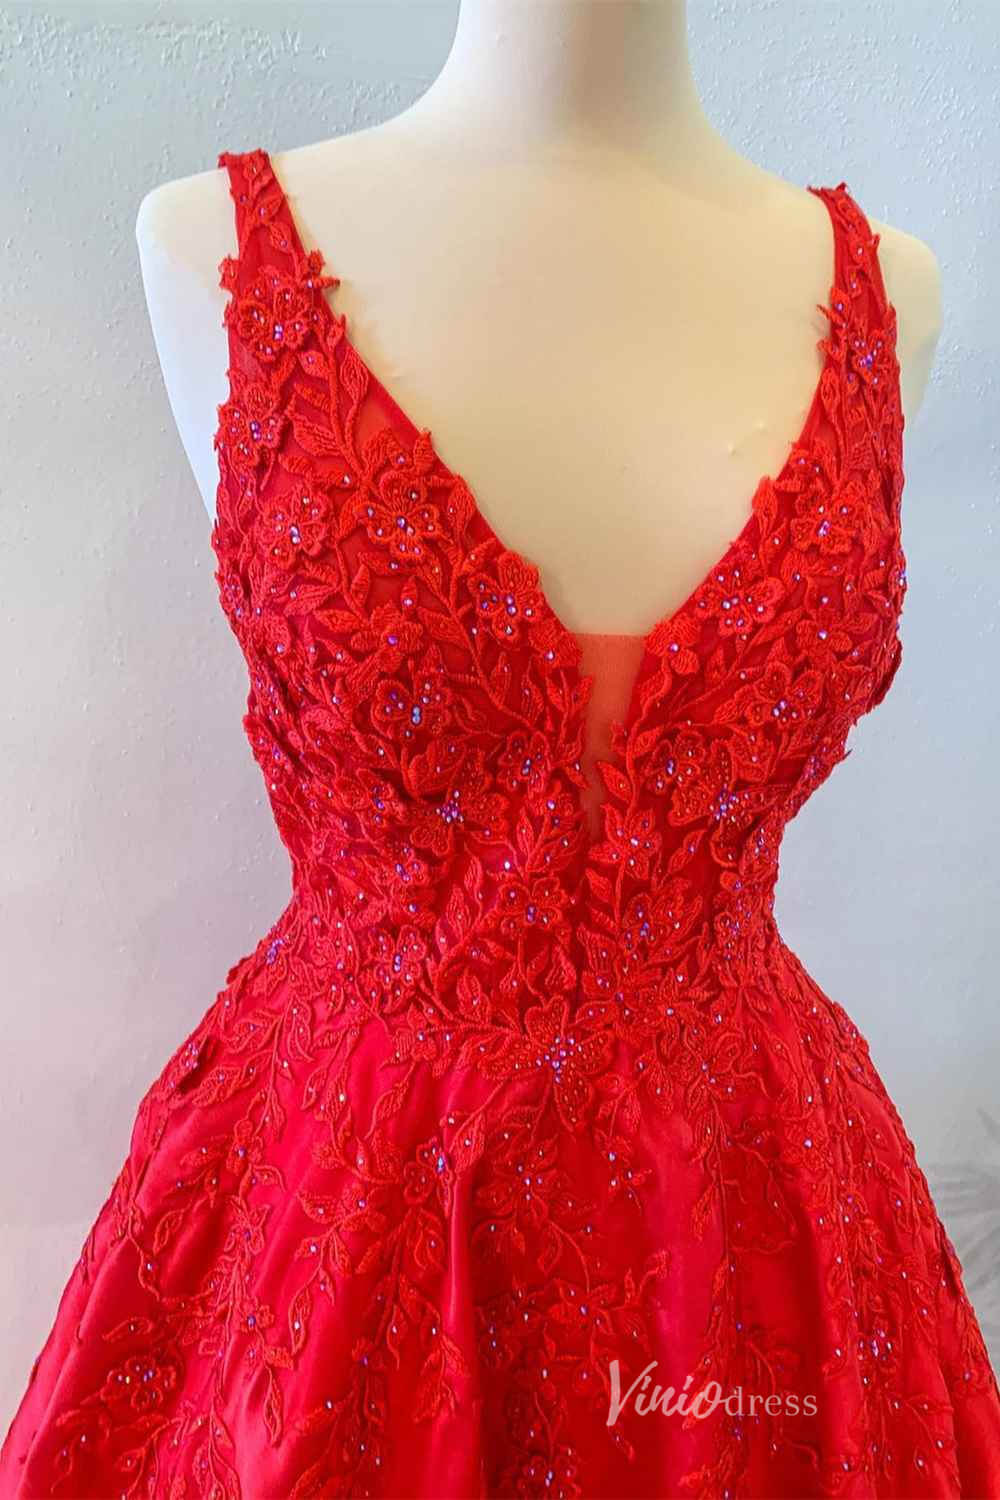 Red Lace Applique Cheap Prom Dresses Plunging V-Neck Satin Formal Gown FD4094-prom dresses-Viniodress-Viniodress